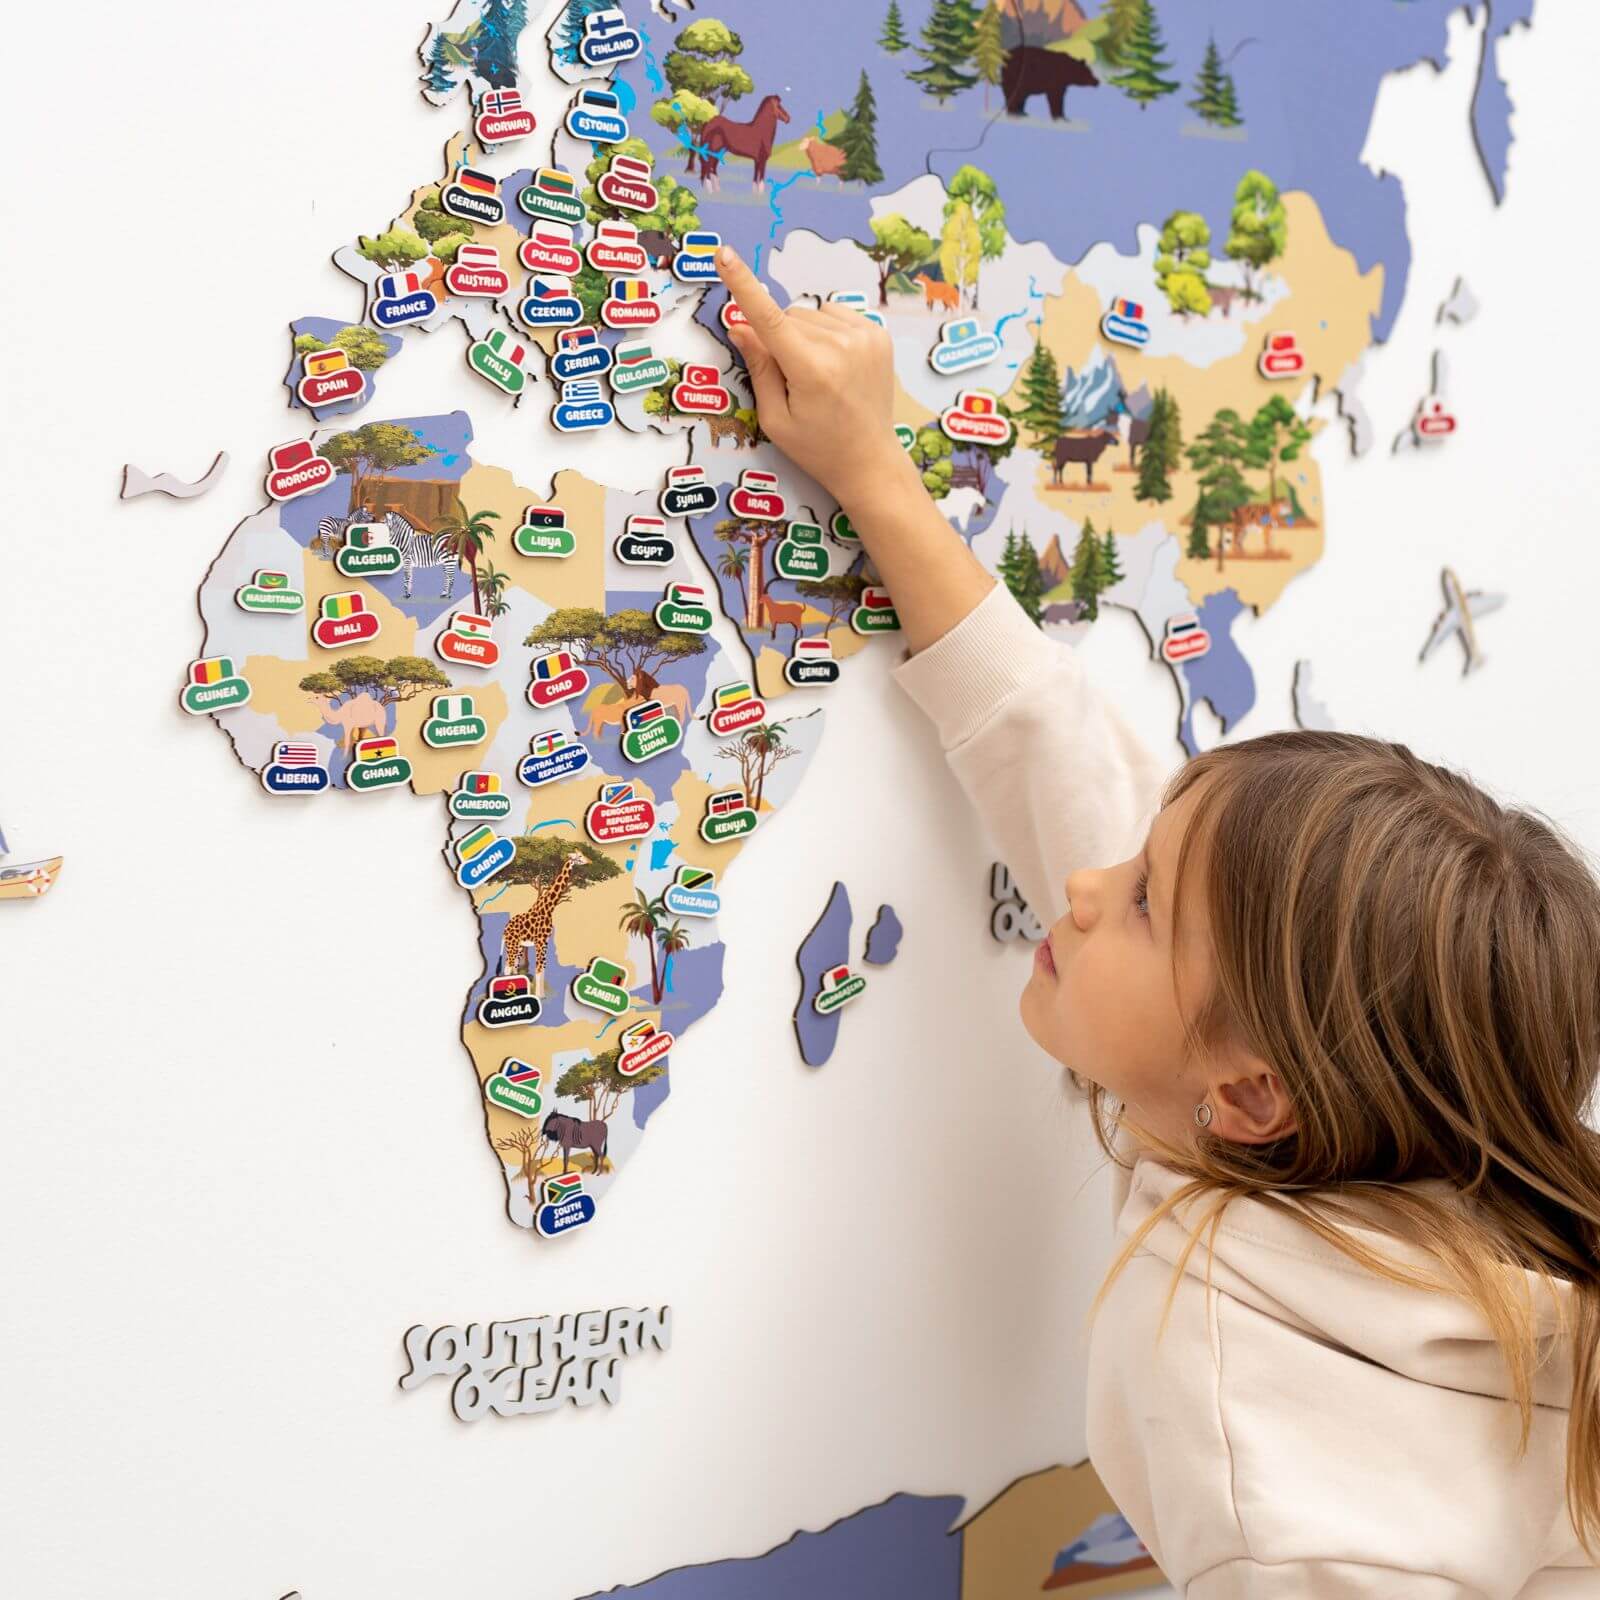 nursery world map